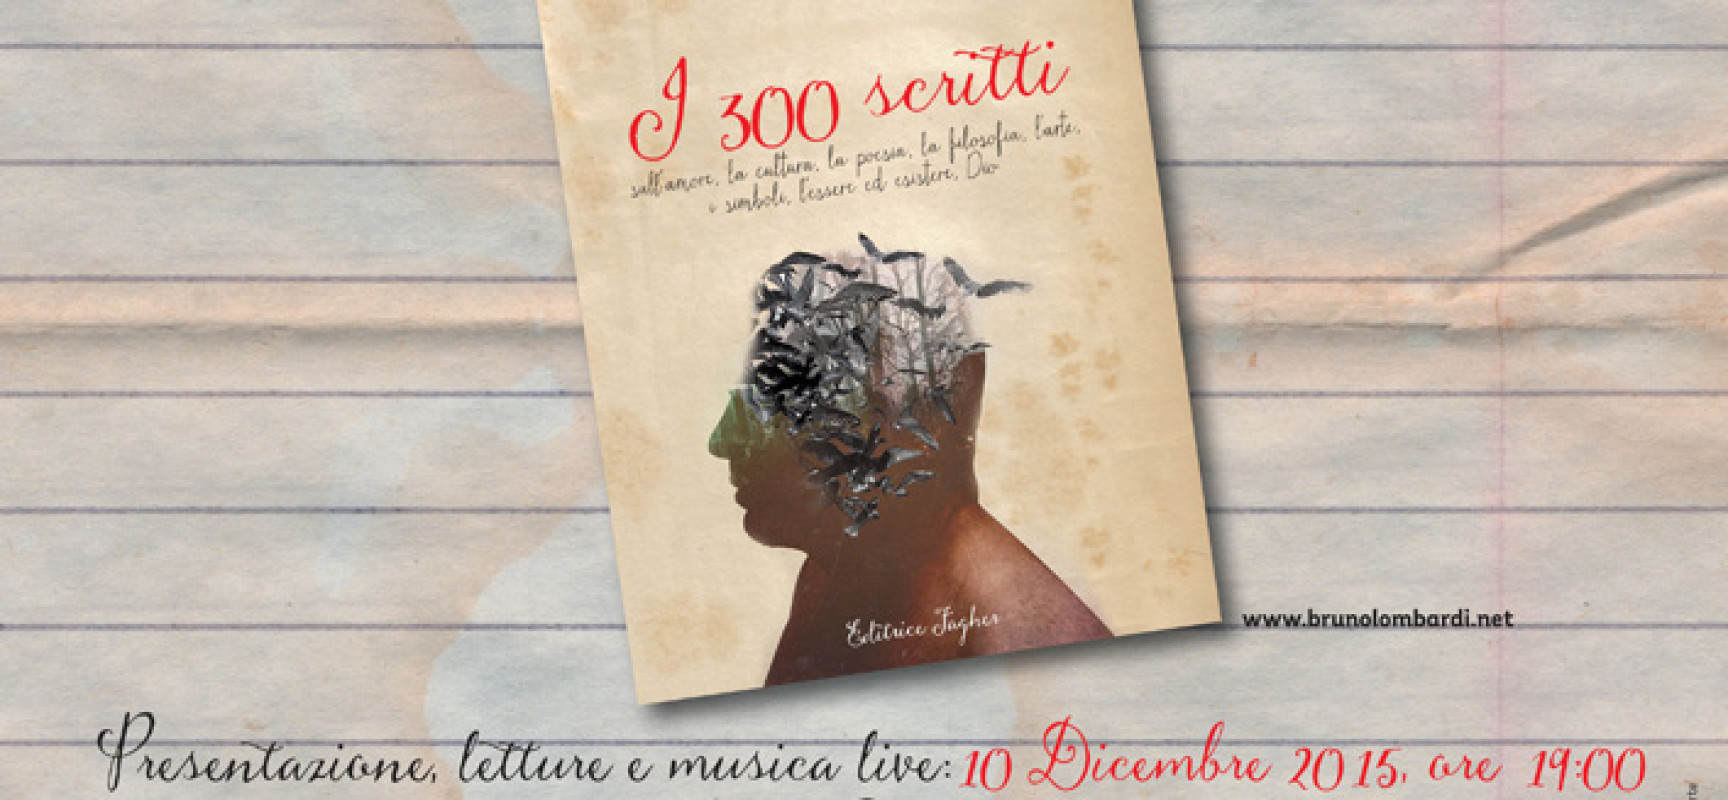 300 scritti di Bruno Lombardi